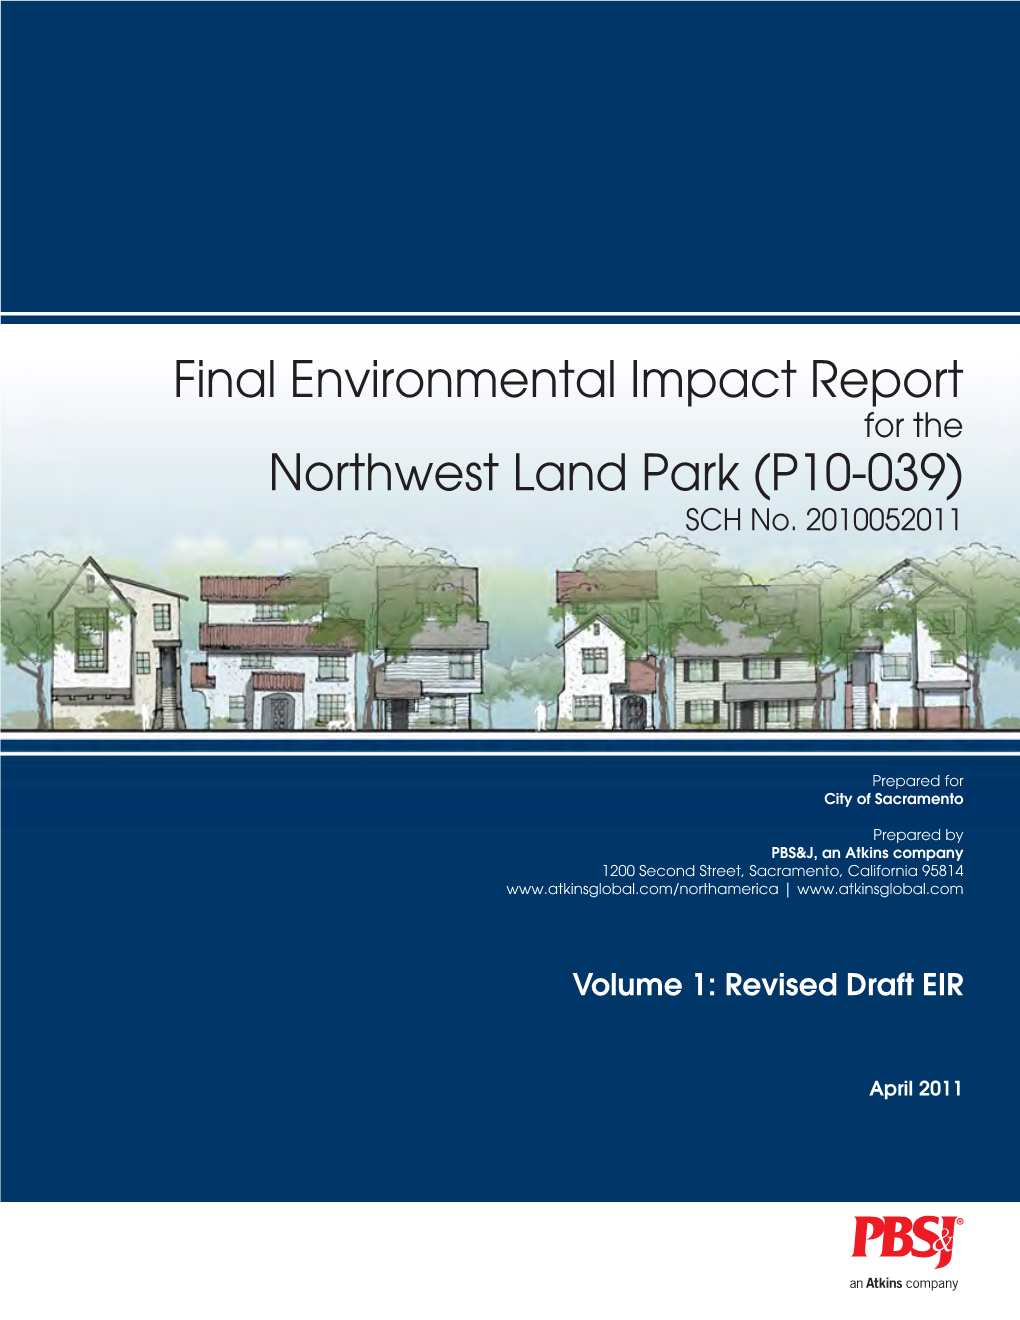 Final Environmental Impact Report Northwest Land Park (P10-039)